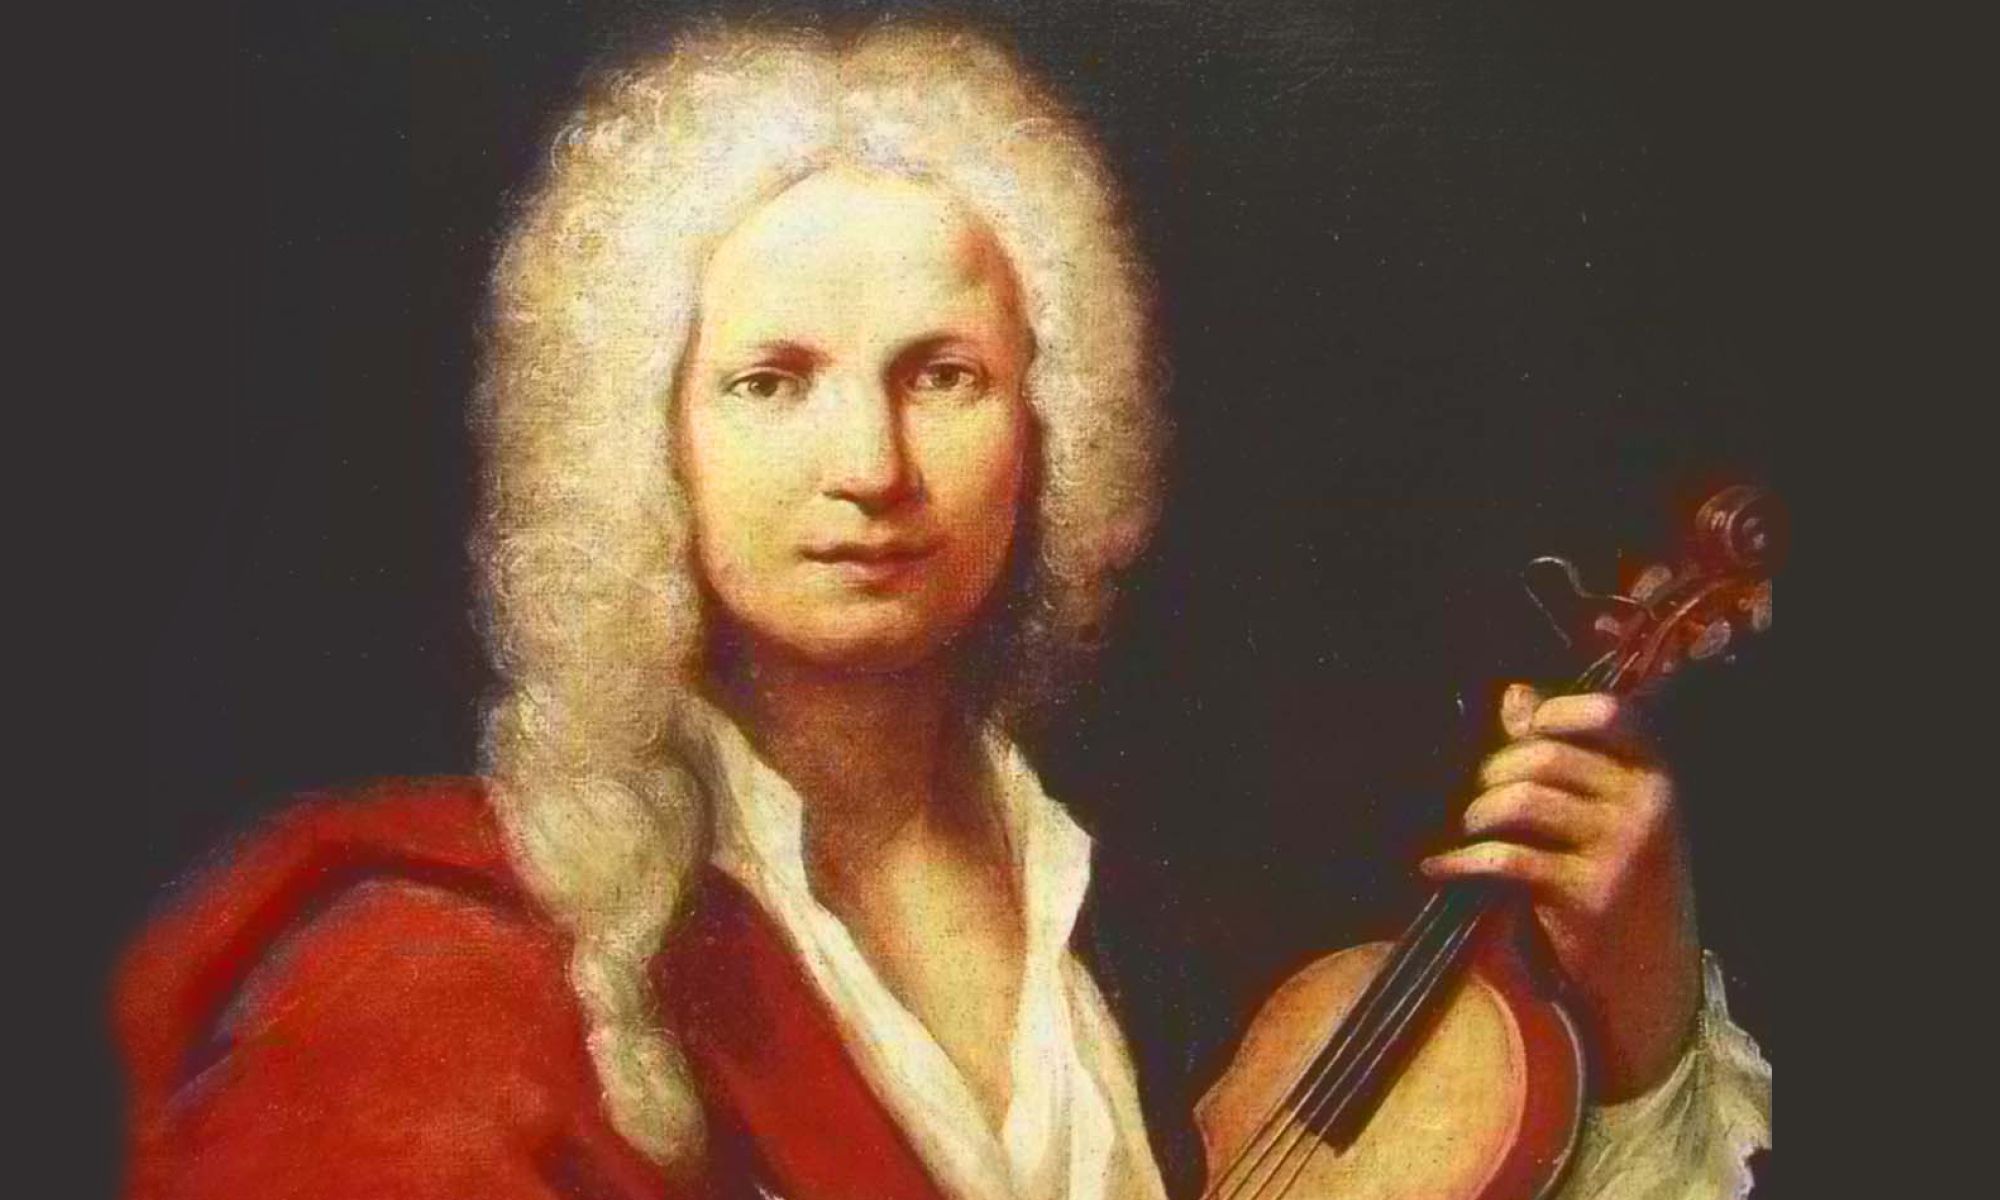 Image of Antonio Vivaldi holding a violin